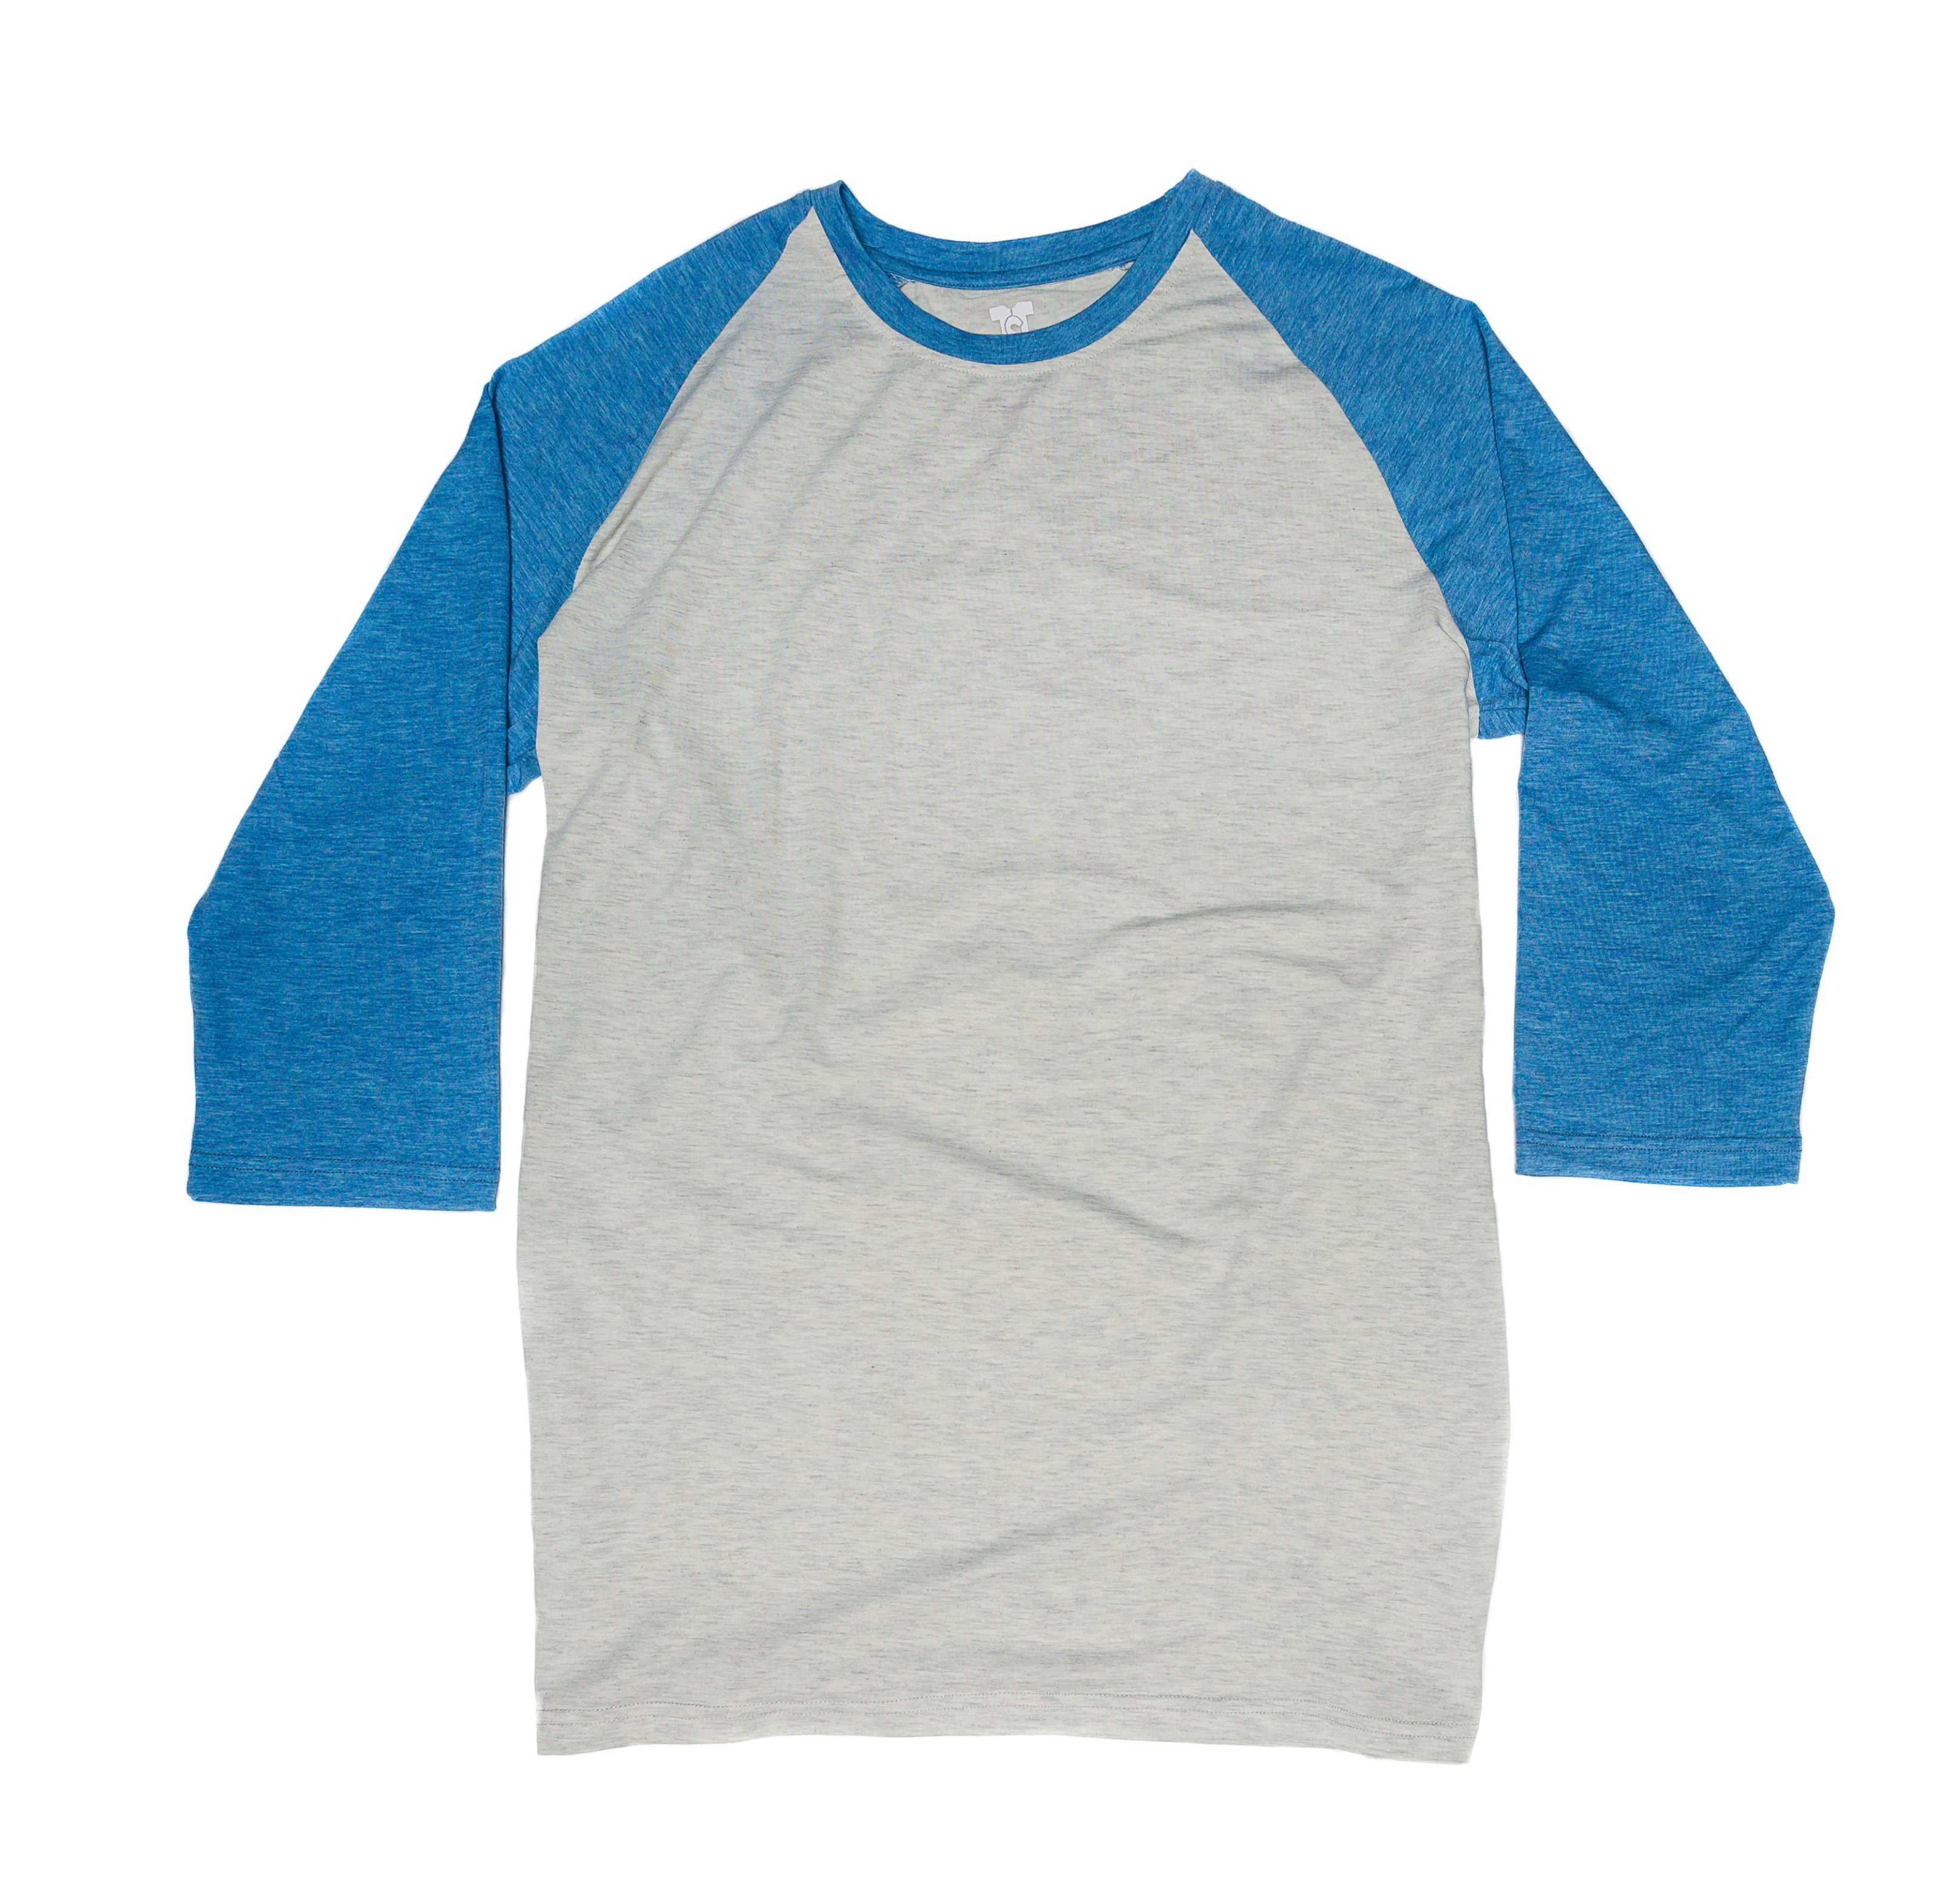 Sand Gray and Blue Raglan 3/4 Sleeve Shirt For Tall Slim Men